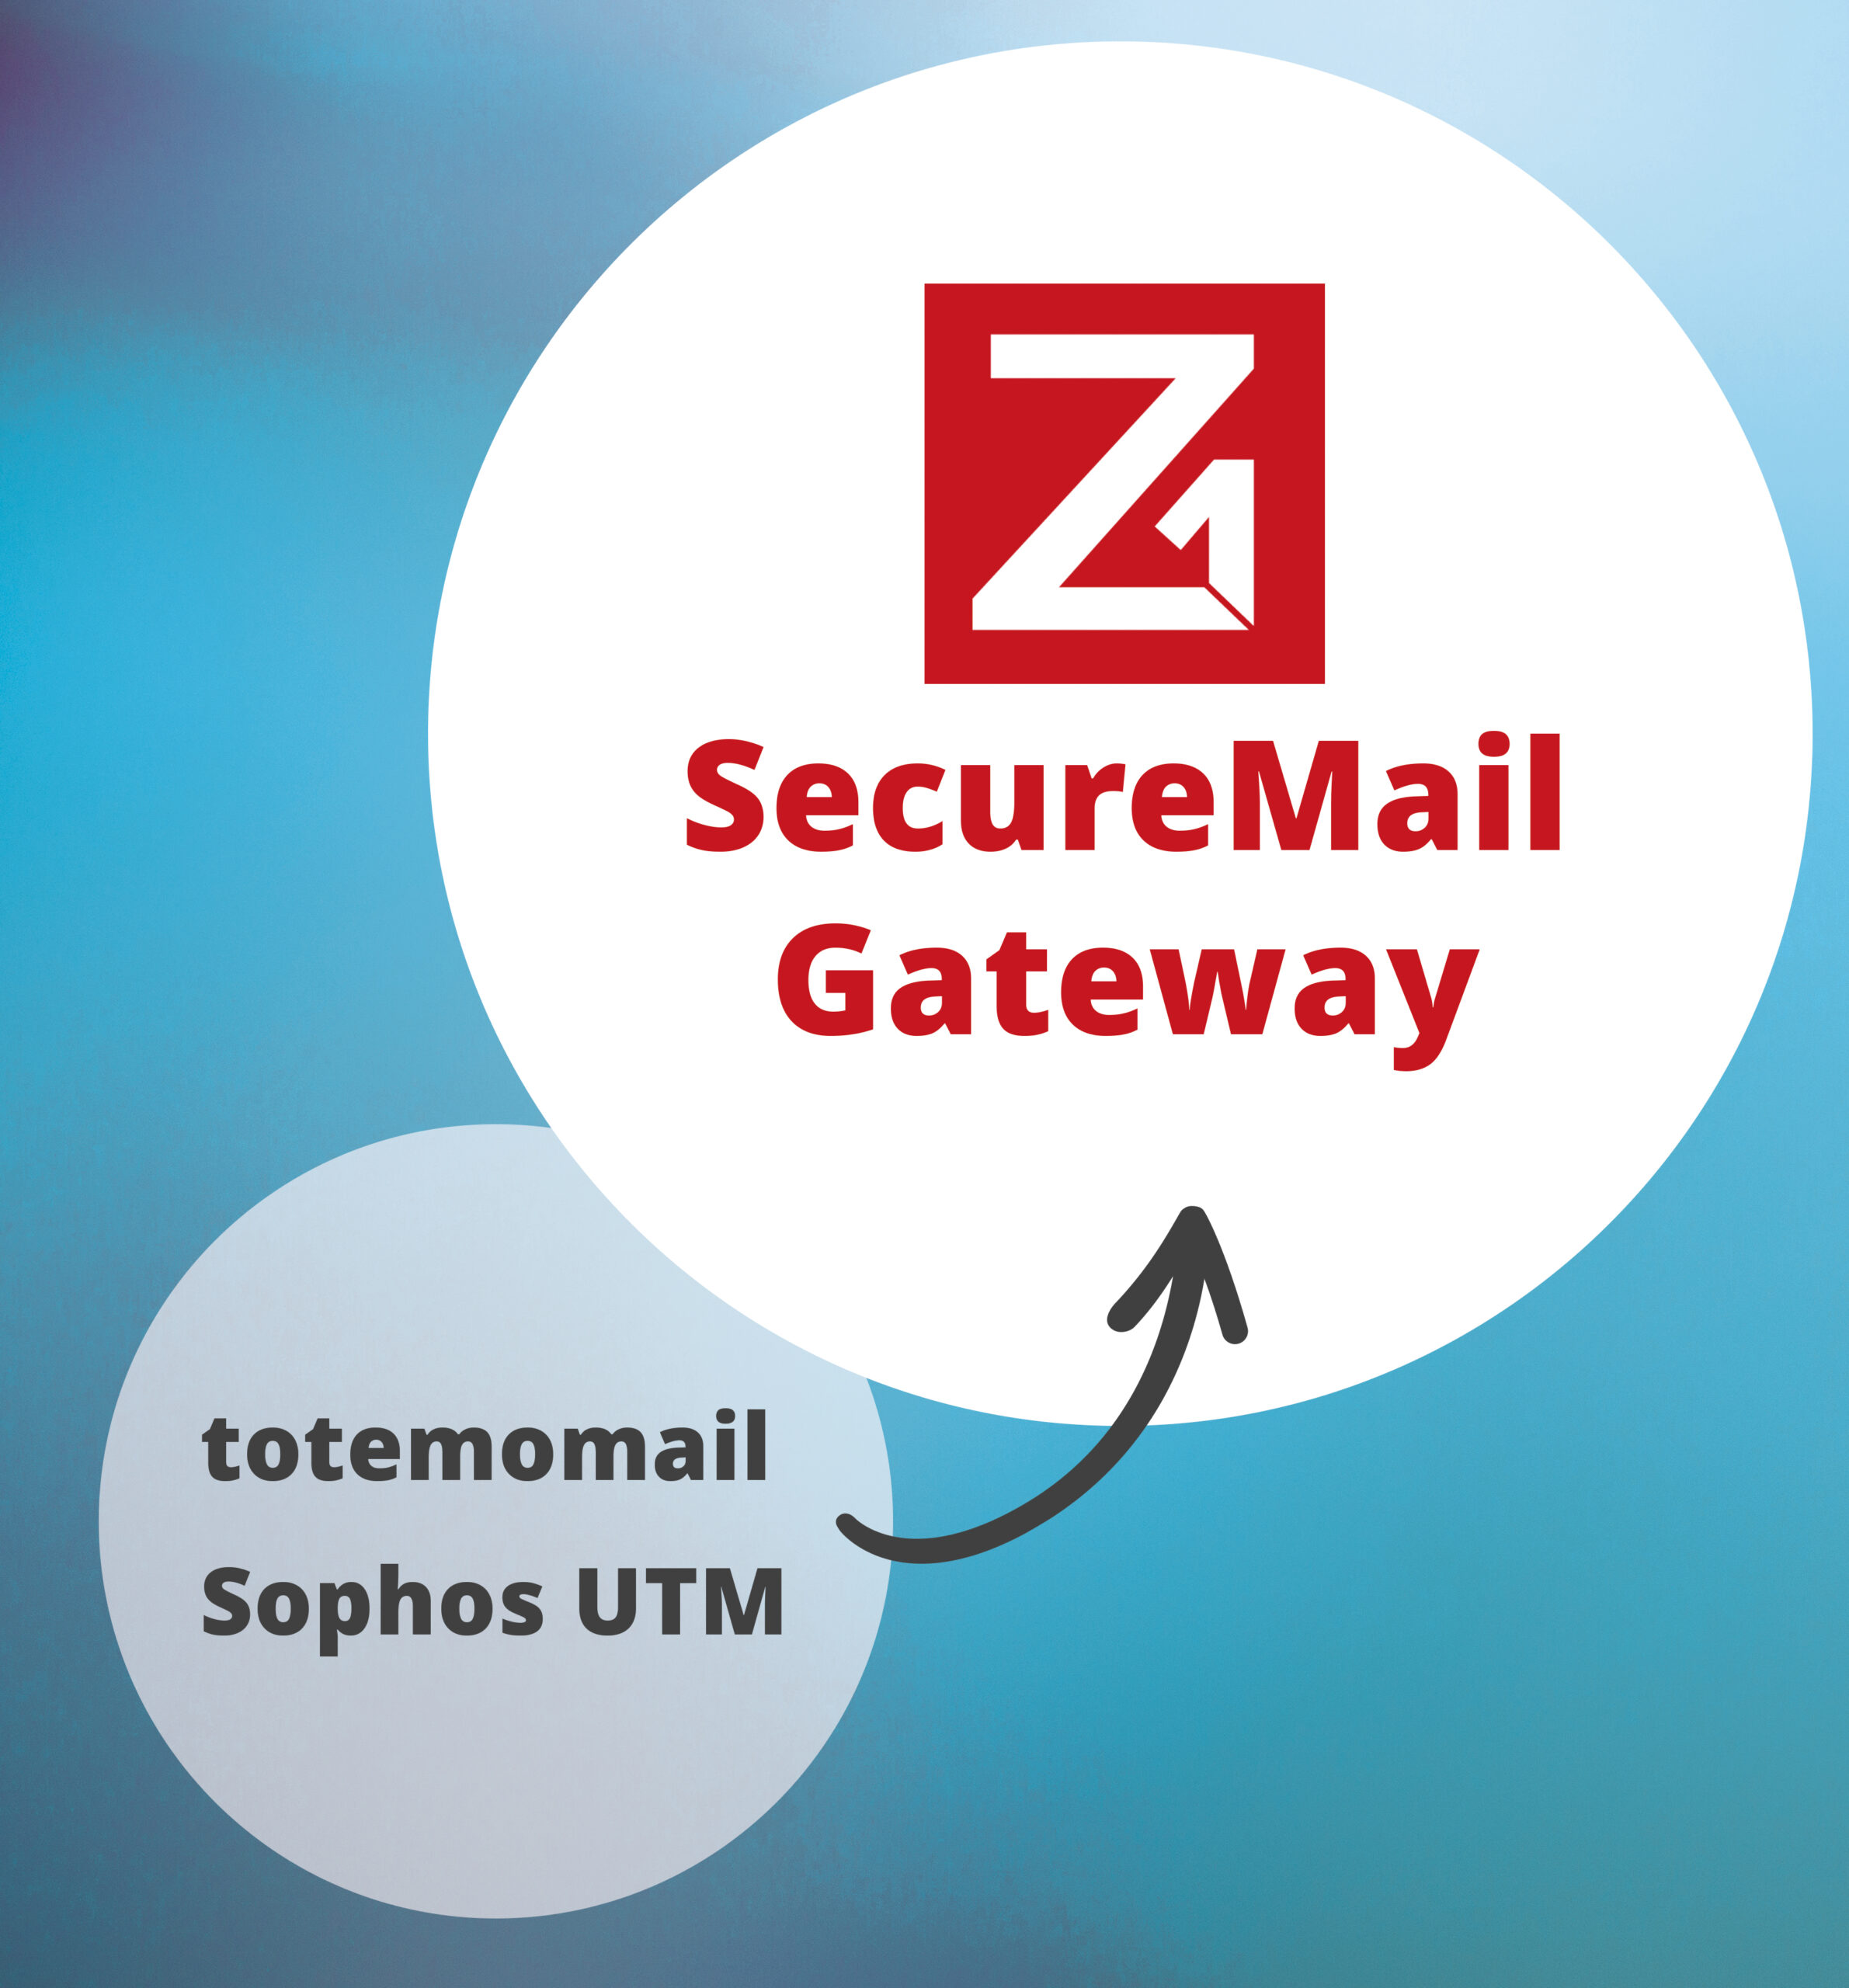 Z1 SecureMail Gateway als Alternative zu Sophos UTM & totemomail